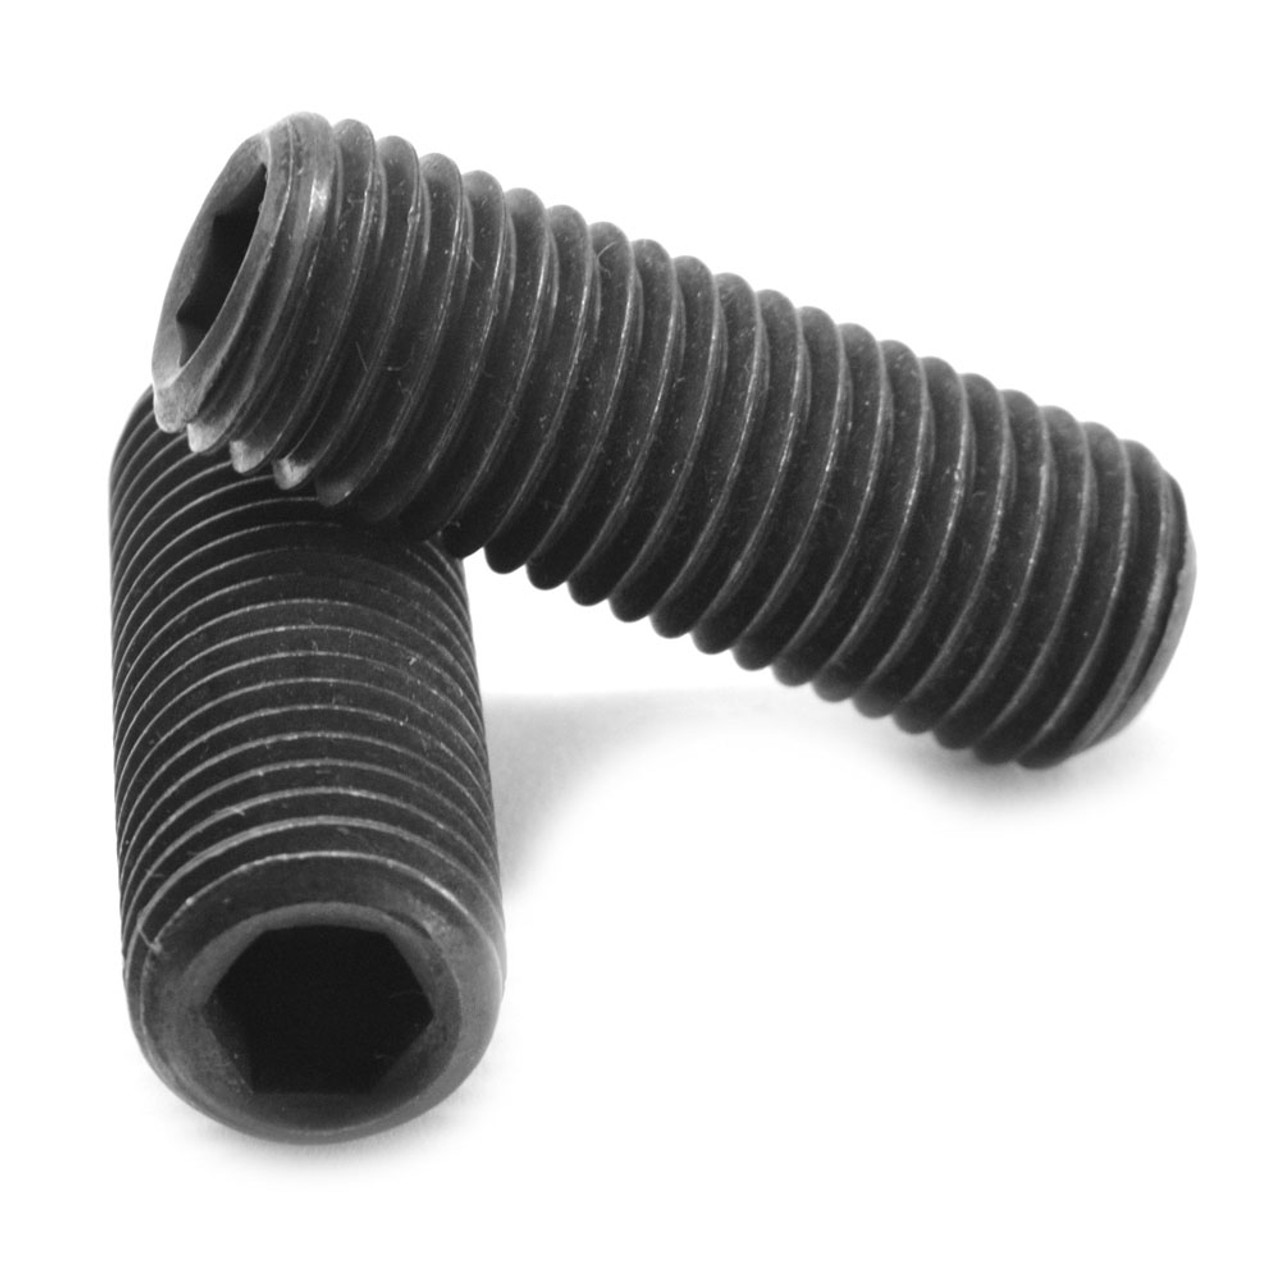 7/16"-14 x 2 1/2" Coarse Thread Socket Set Screw Cup Point Alloy Steel Black Oxide